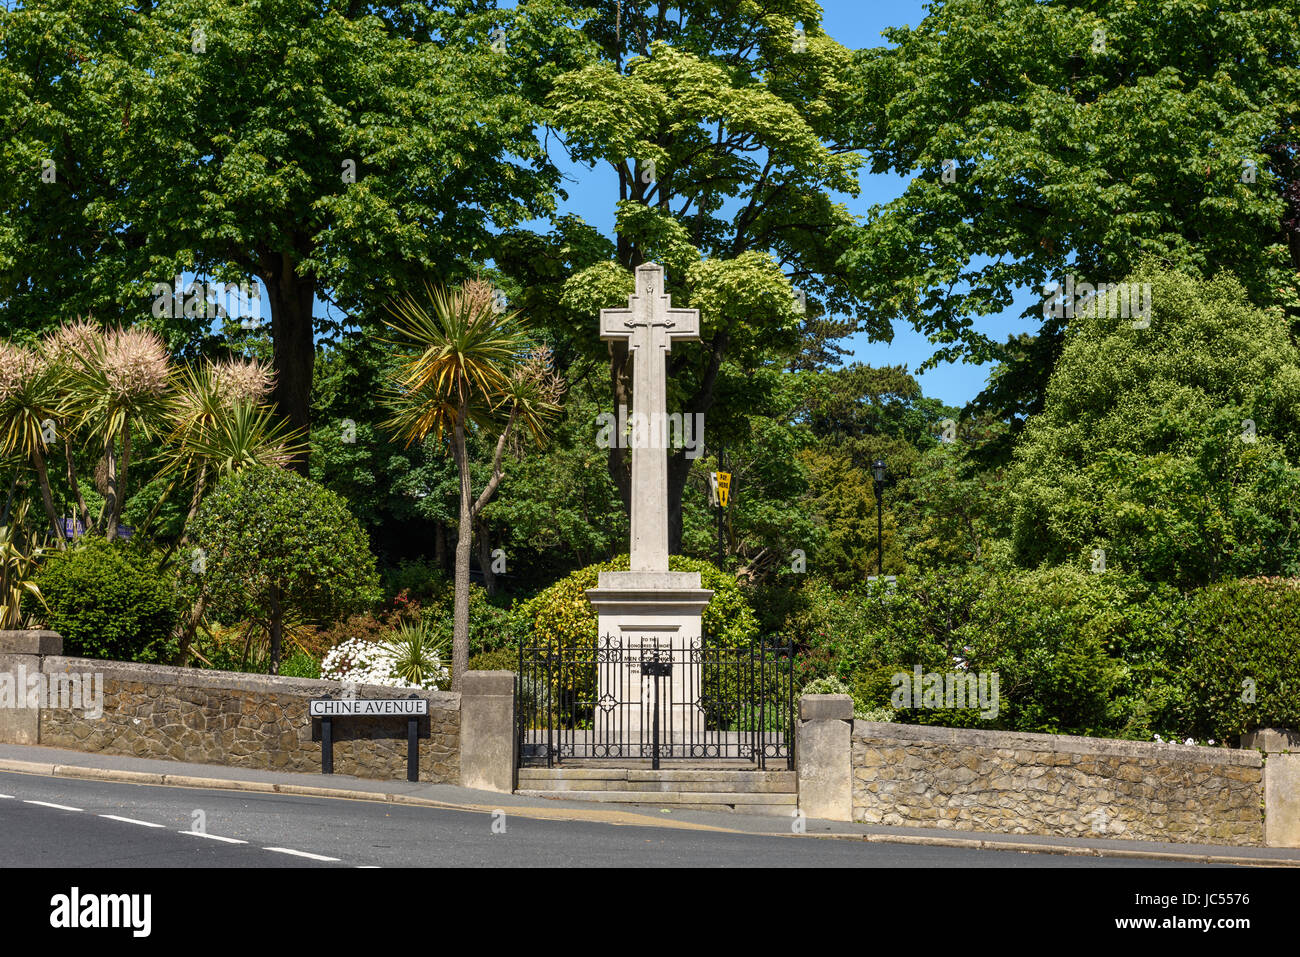 War Memorial, Old Shanklin, Isle of Wight, UK Banque D'Images